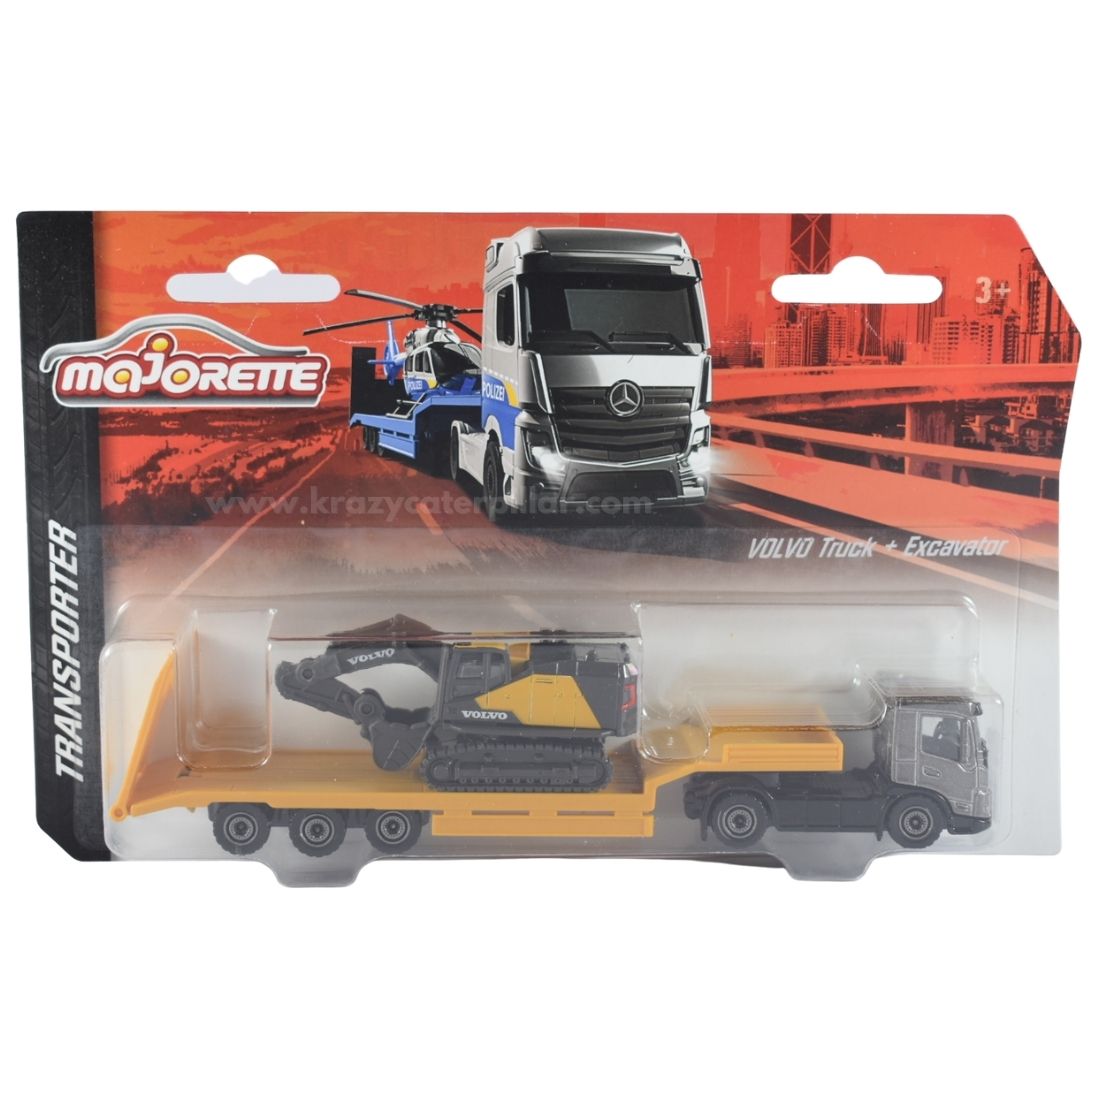 Volvo Truck + Excavator: Transporter | Majorette